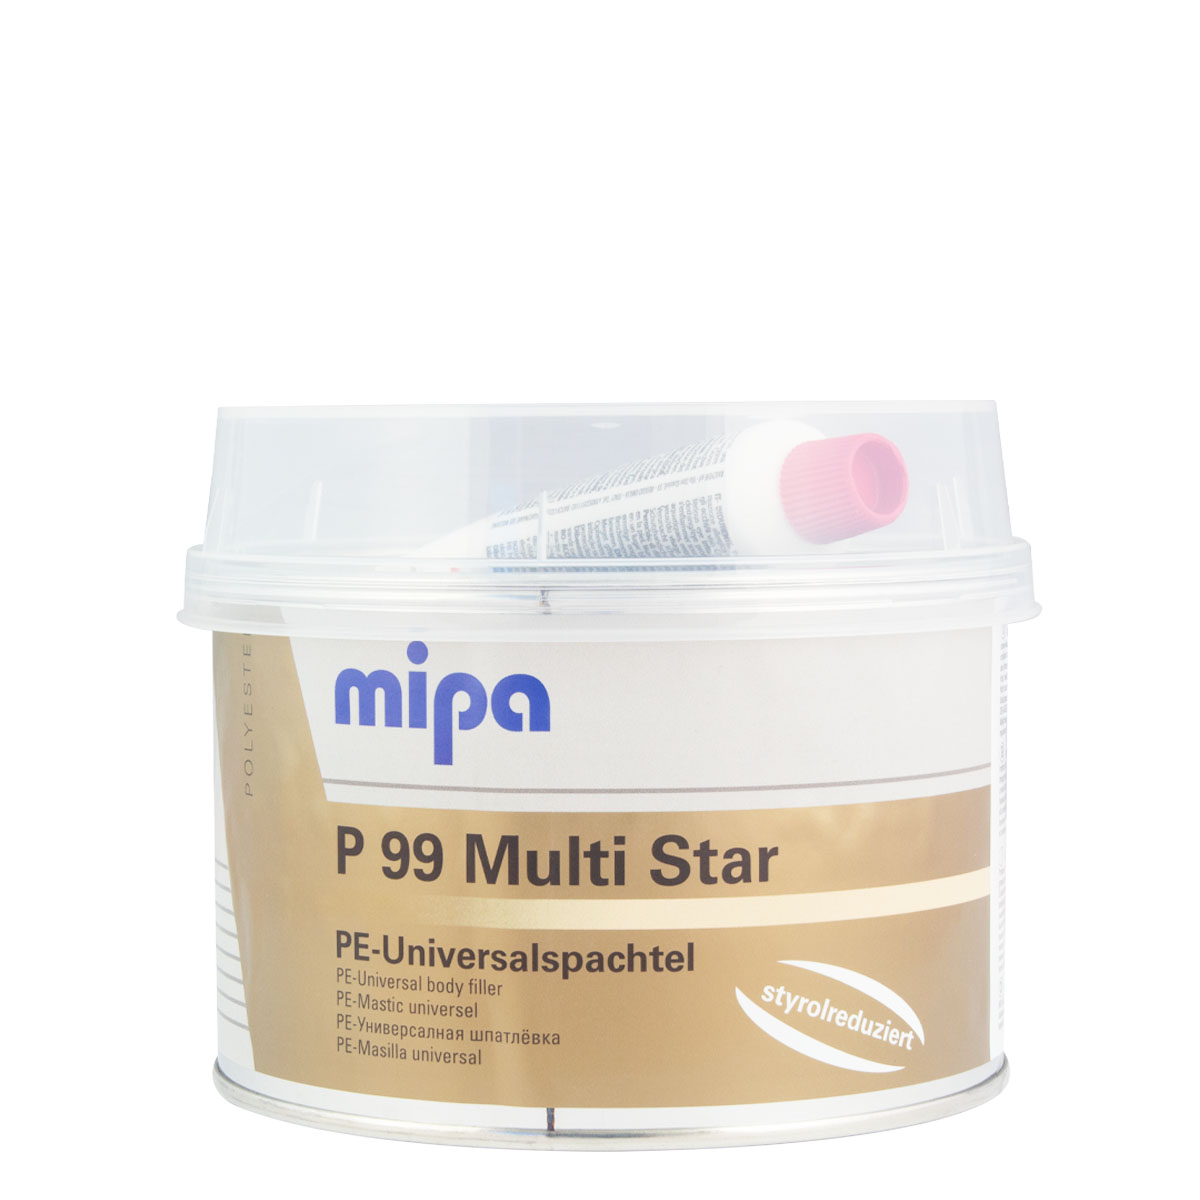 mipa_p99_multi-star_pe-universalspachtel_gross